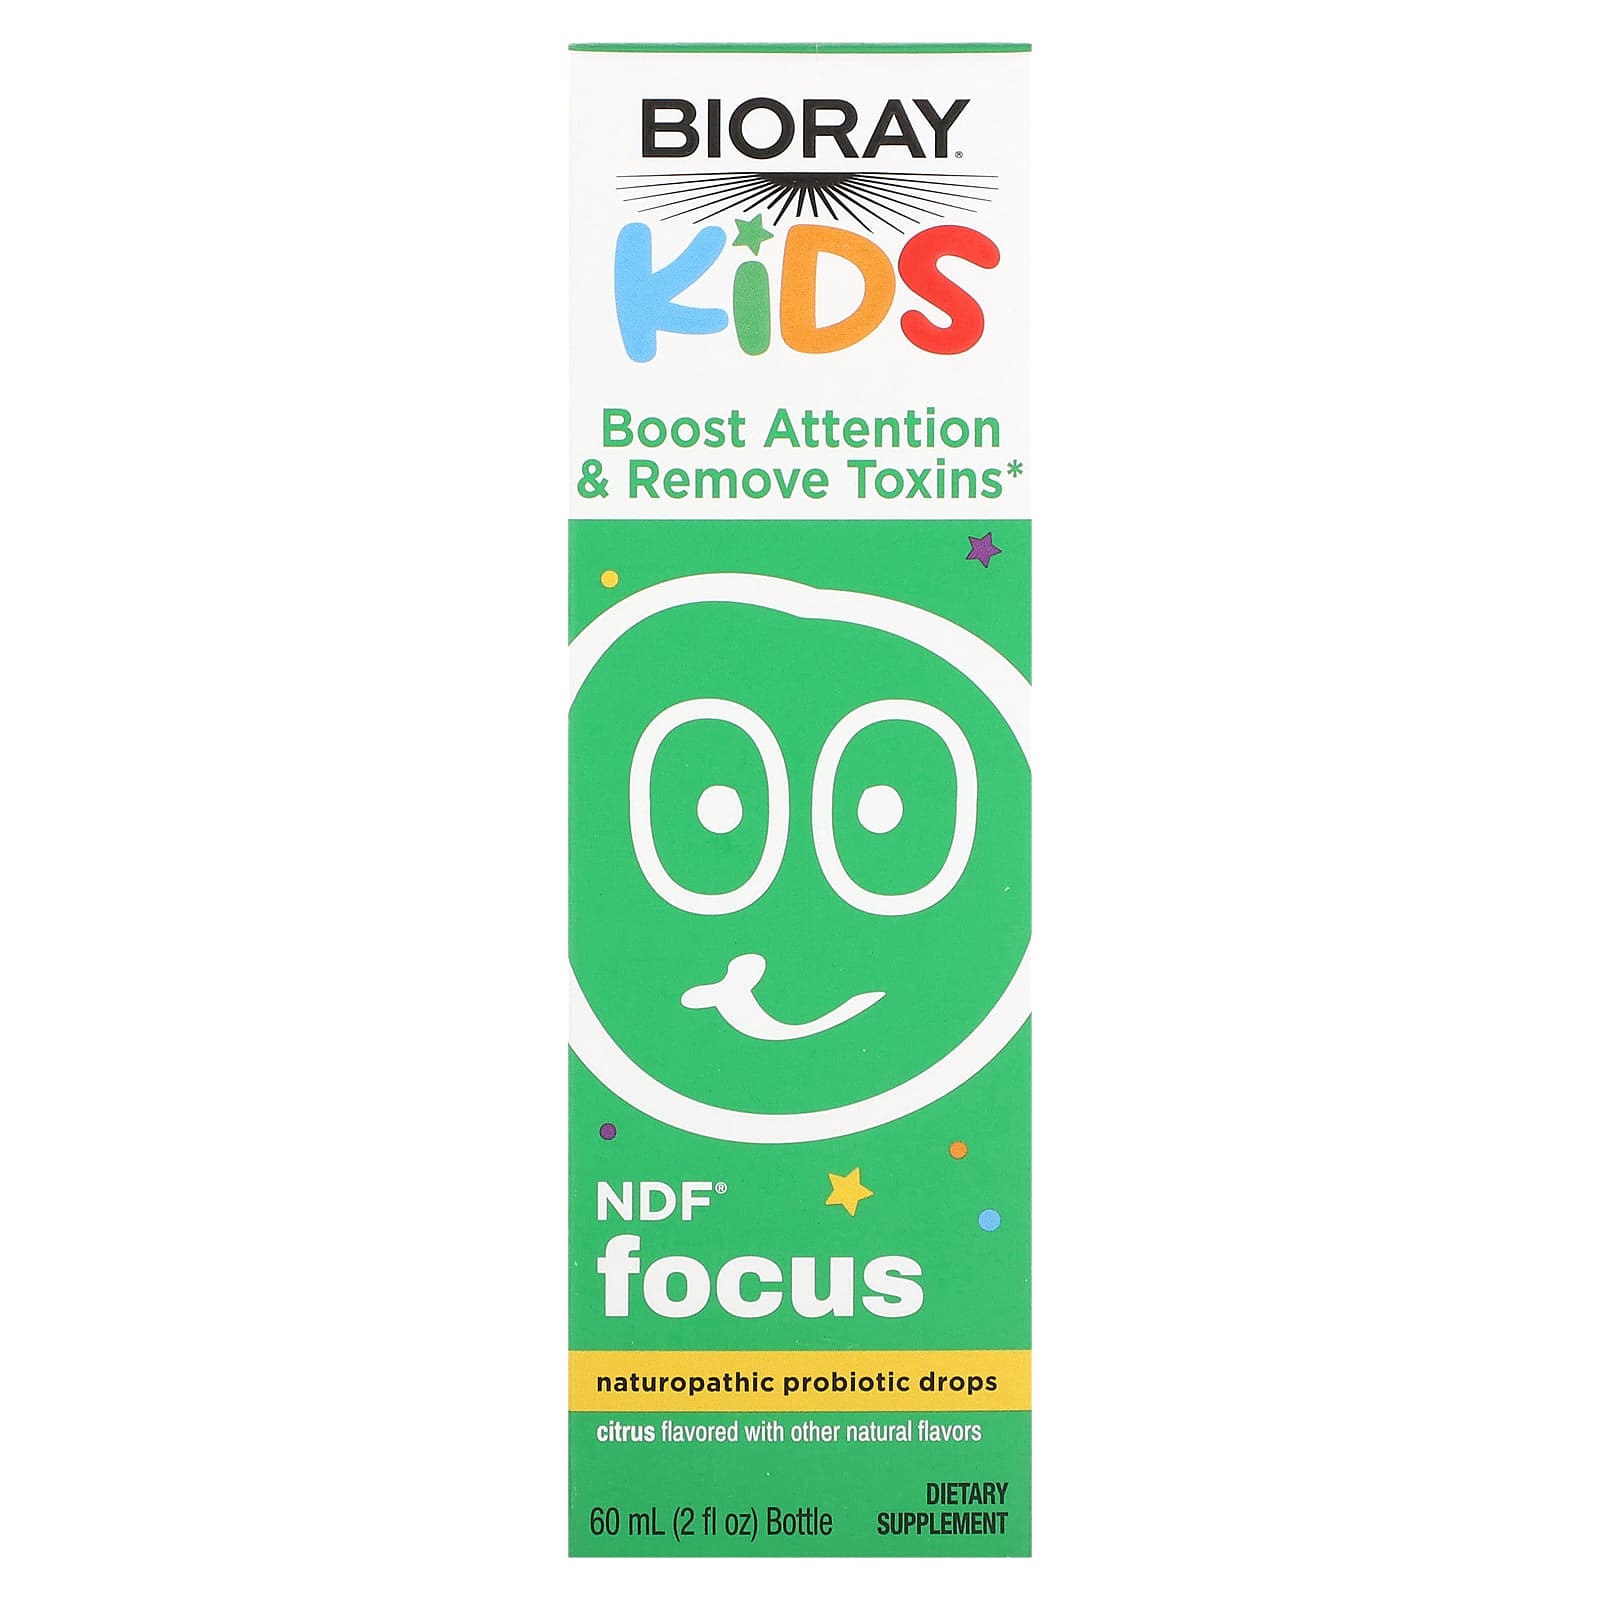 Bioray-Kids-NDF Focus-Naturopathic Probiotic Drops-Citrus-2 fl oz (60 ml)